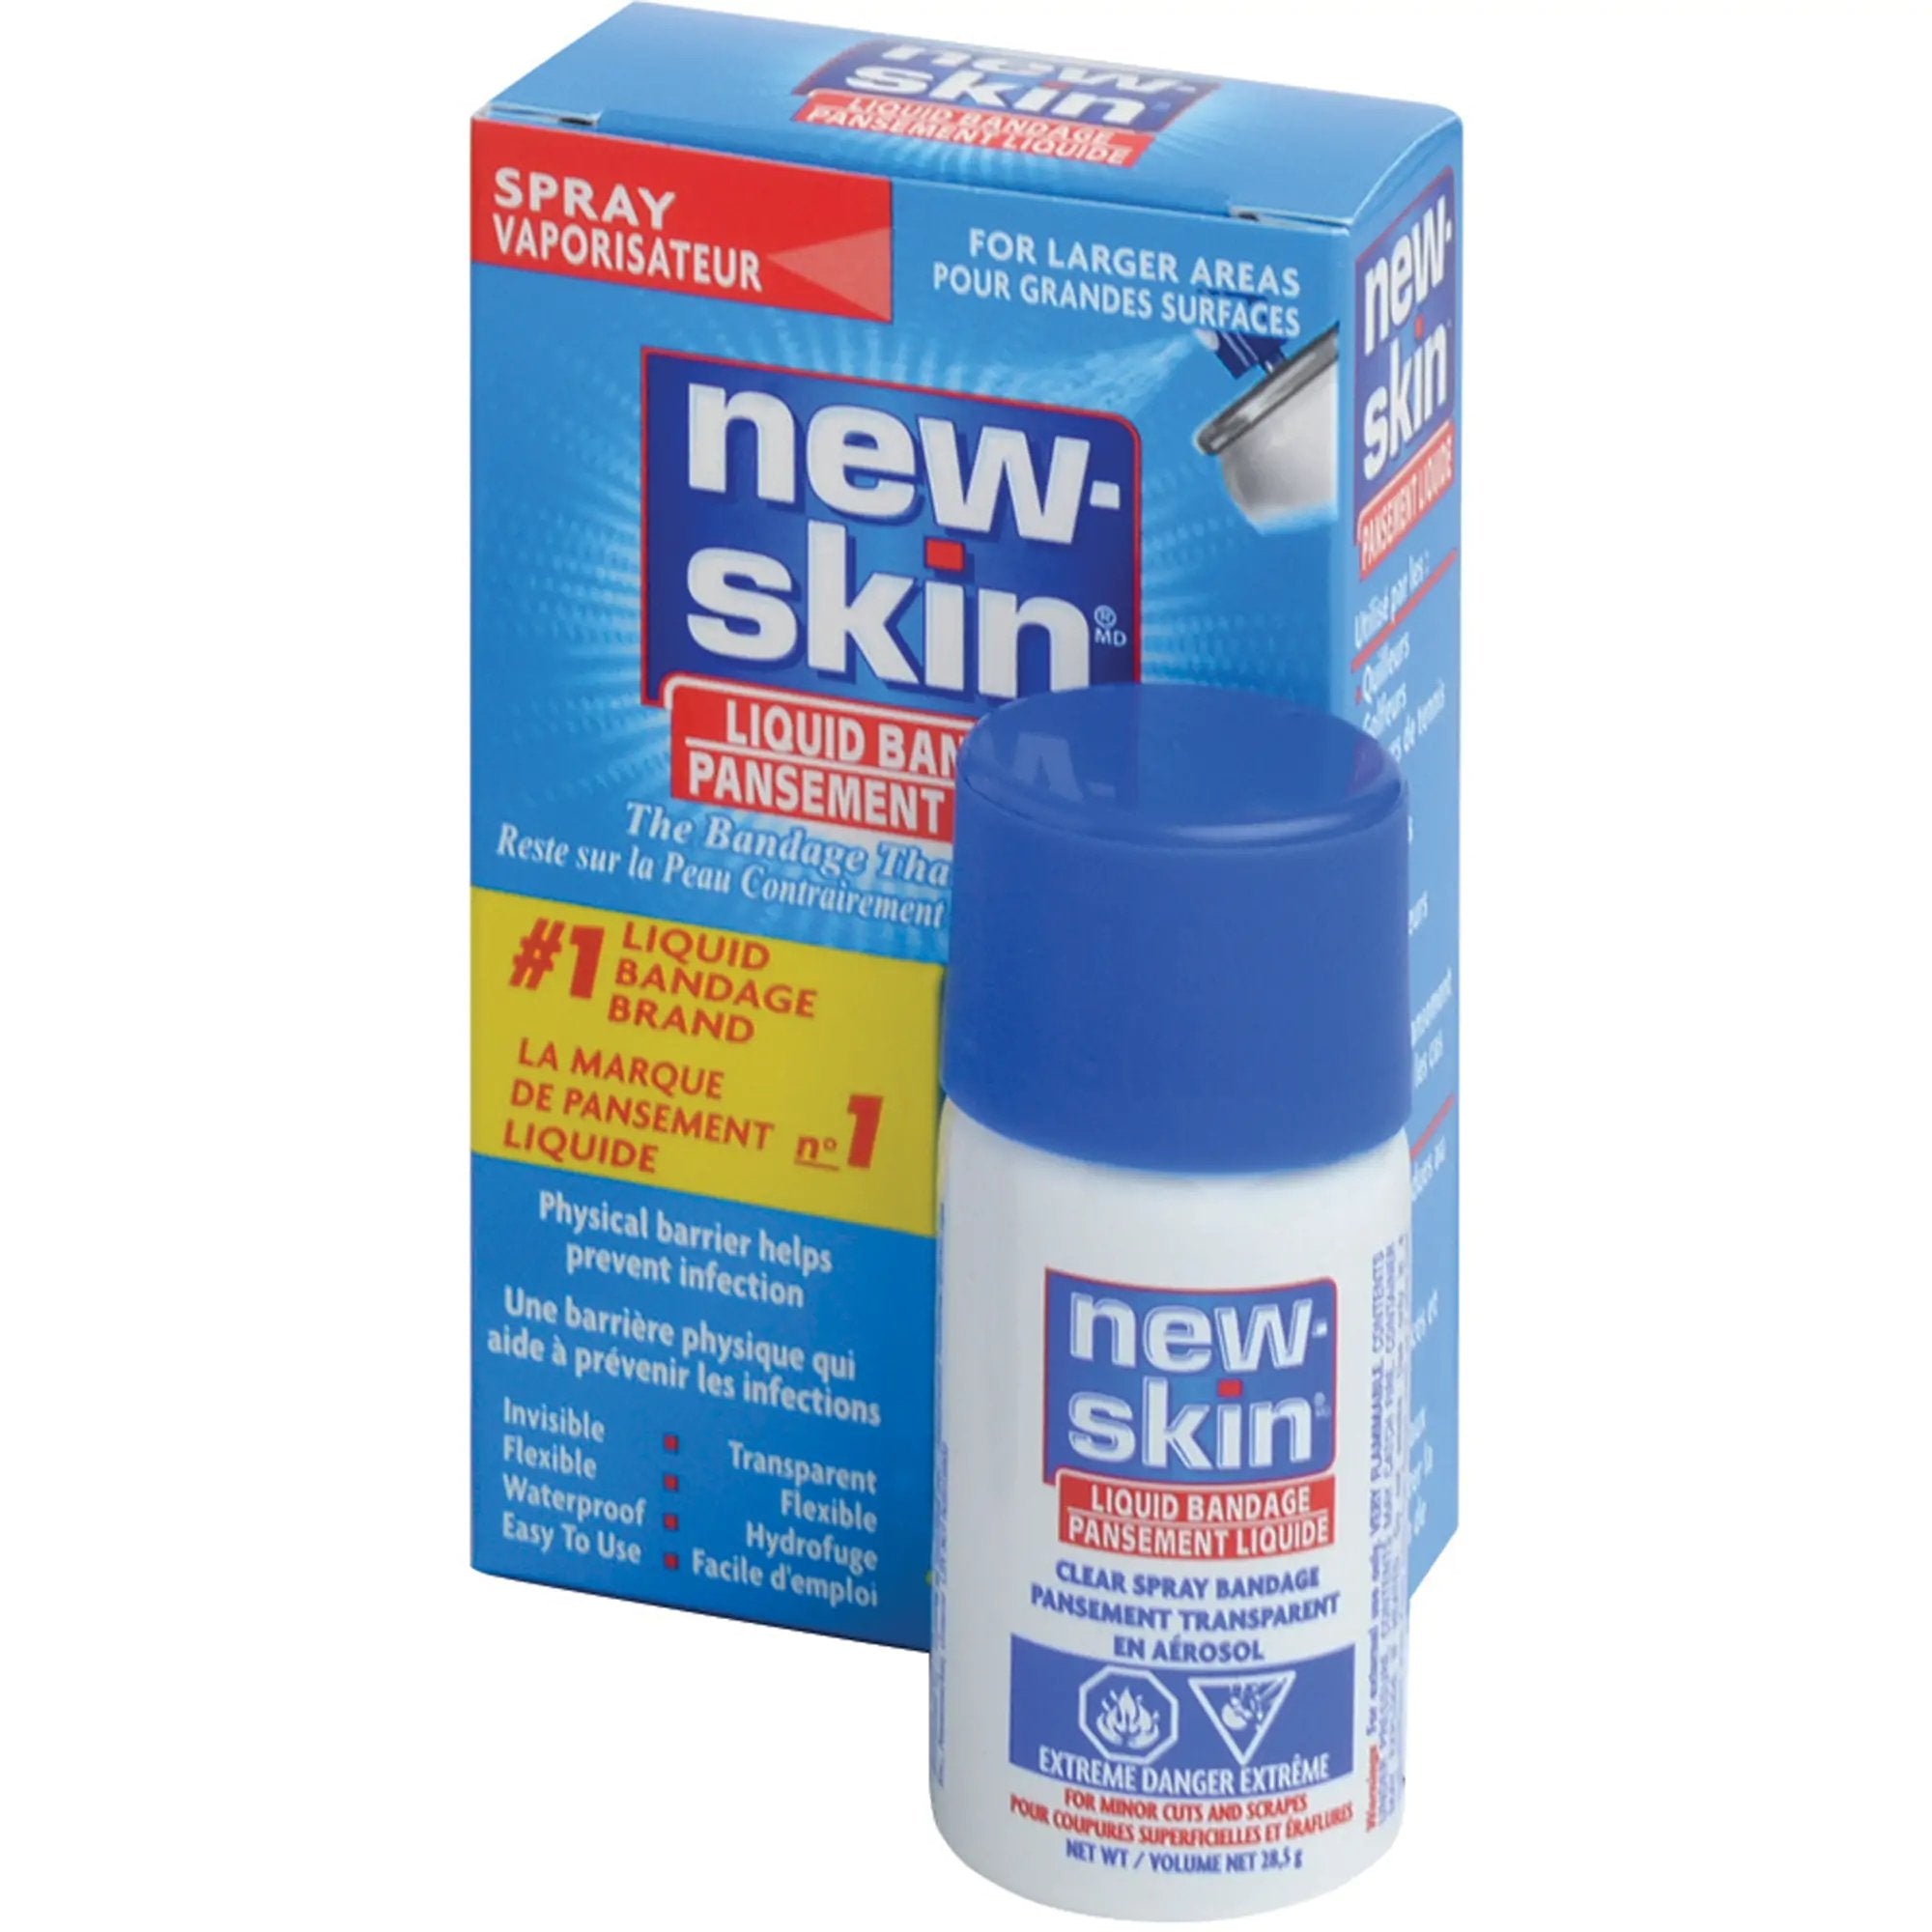 New-Skin® Liquid Bandage - CYANvisuals